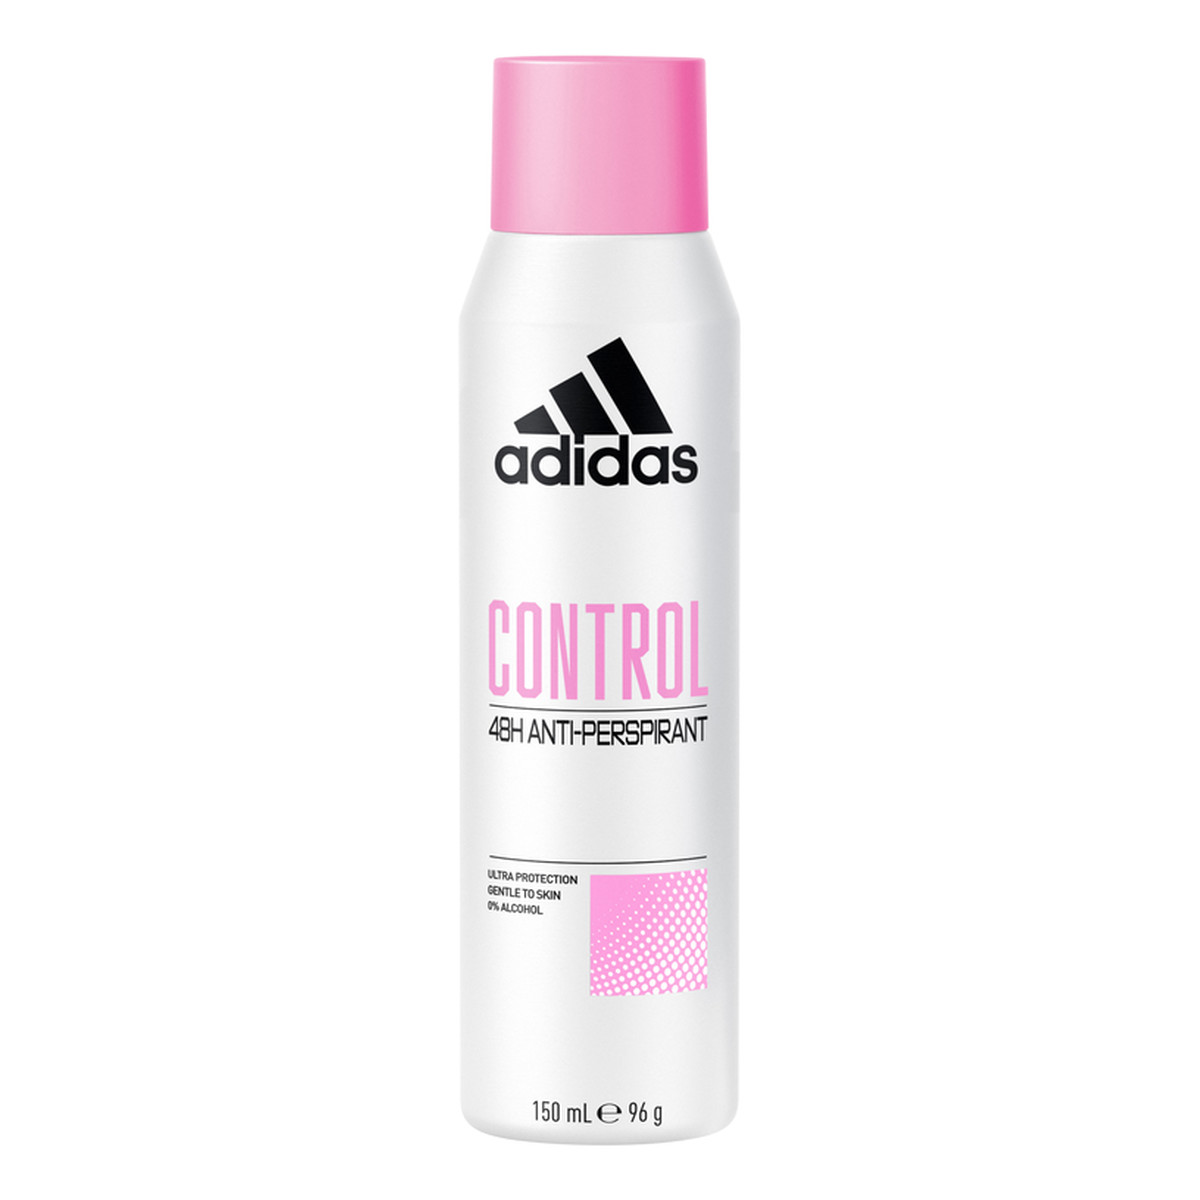 Adidas Control Antyperspirant spray 48H 150ml